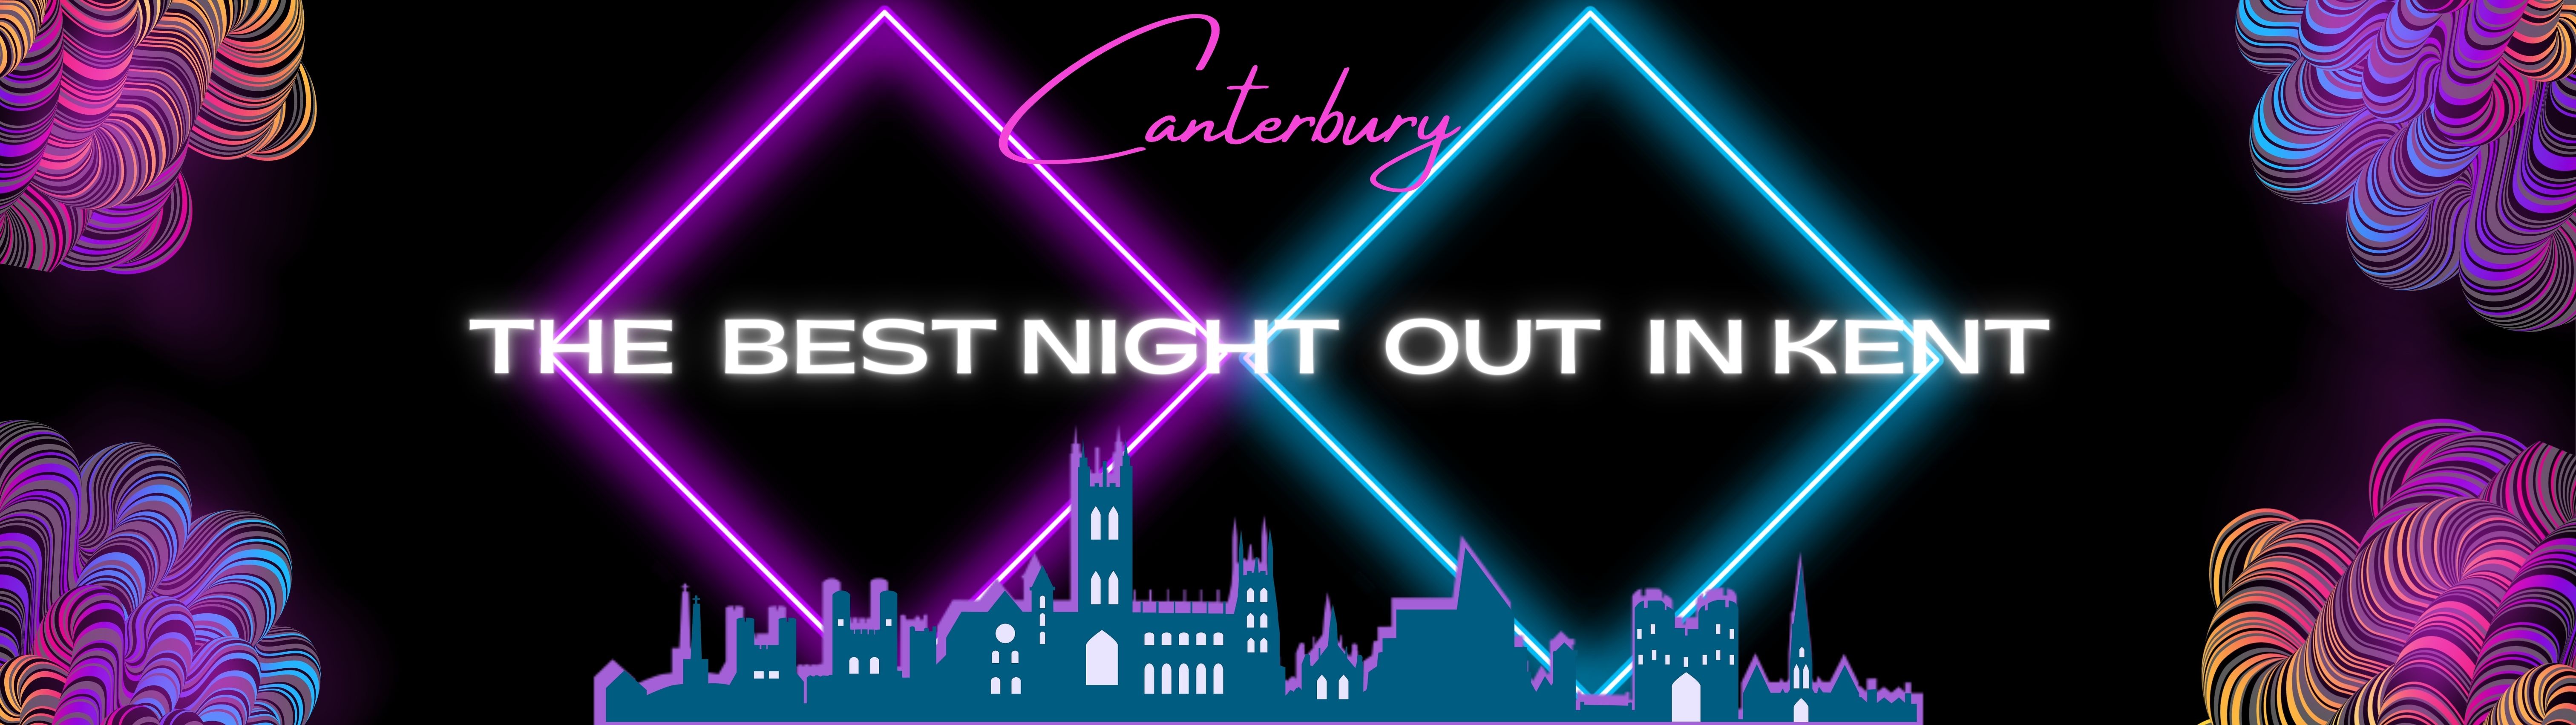 Canterbury Nightlife Sponsored Post (1600 X 450 Mm)